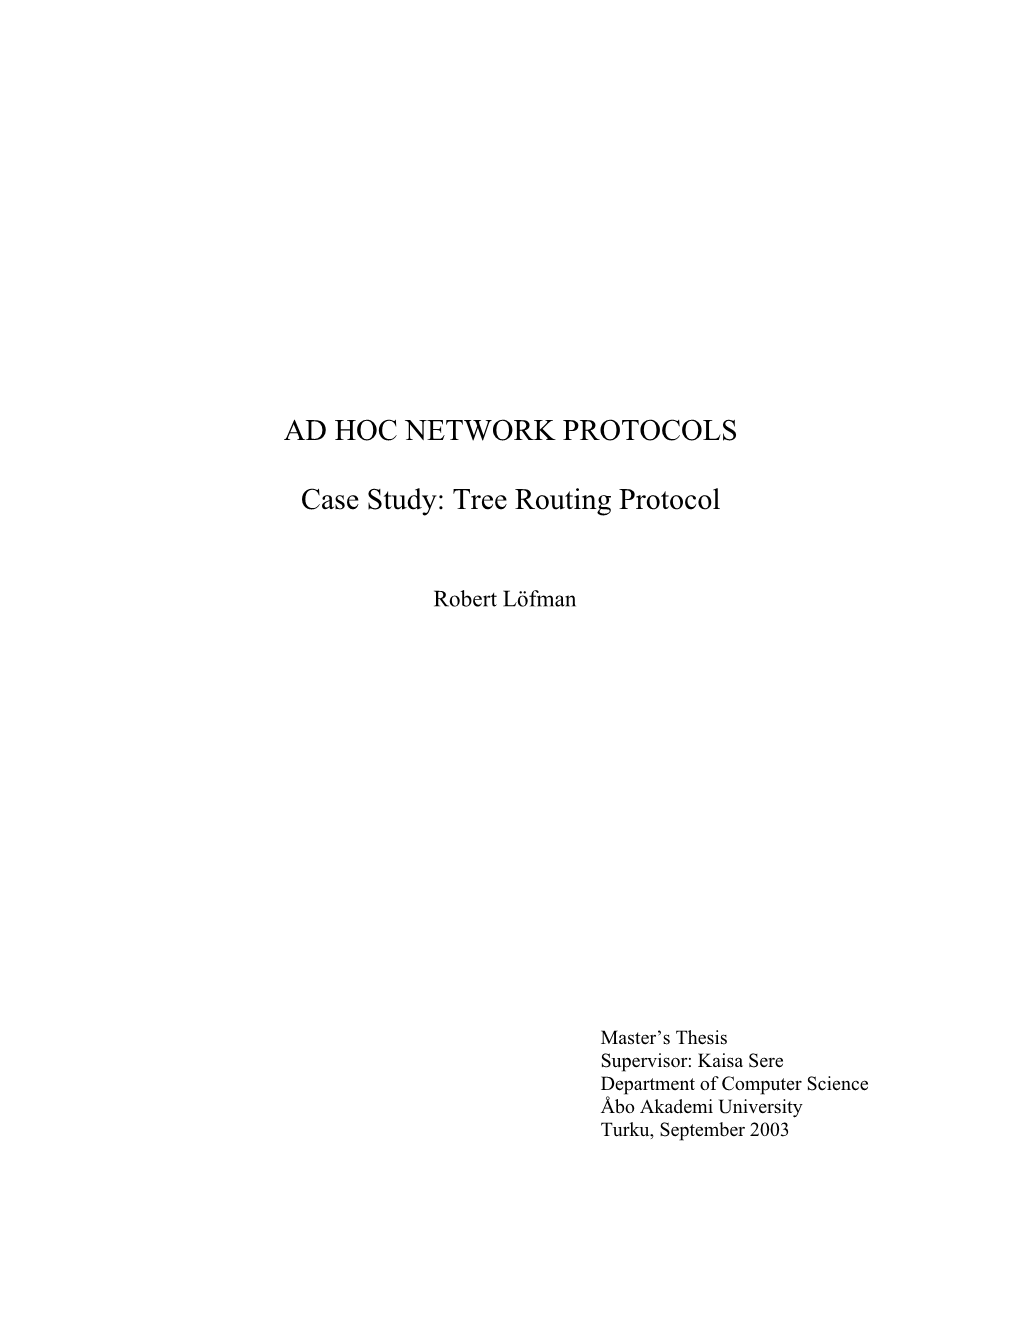 Case Study: Tree Routing Protocol